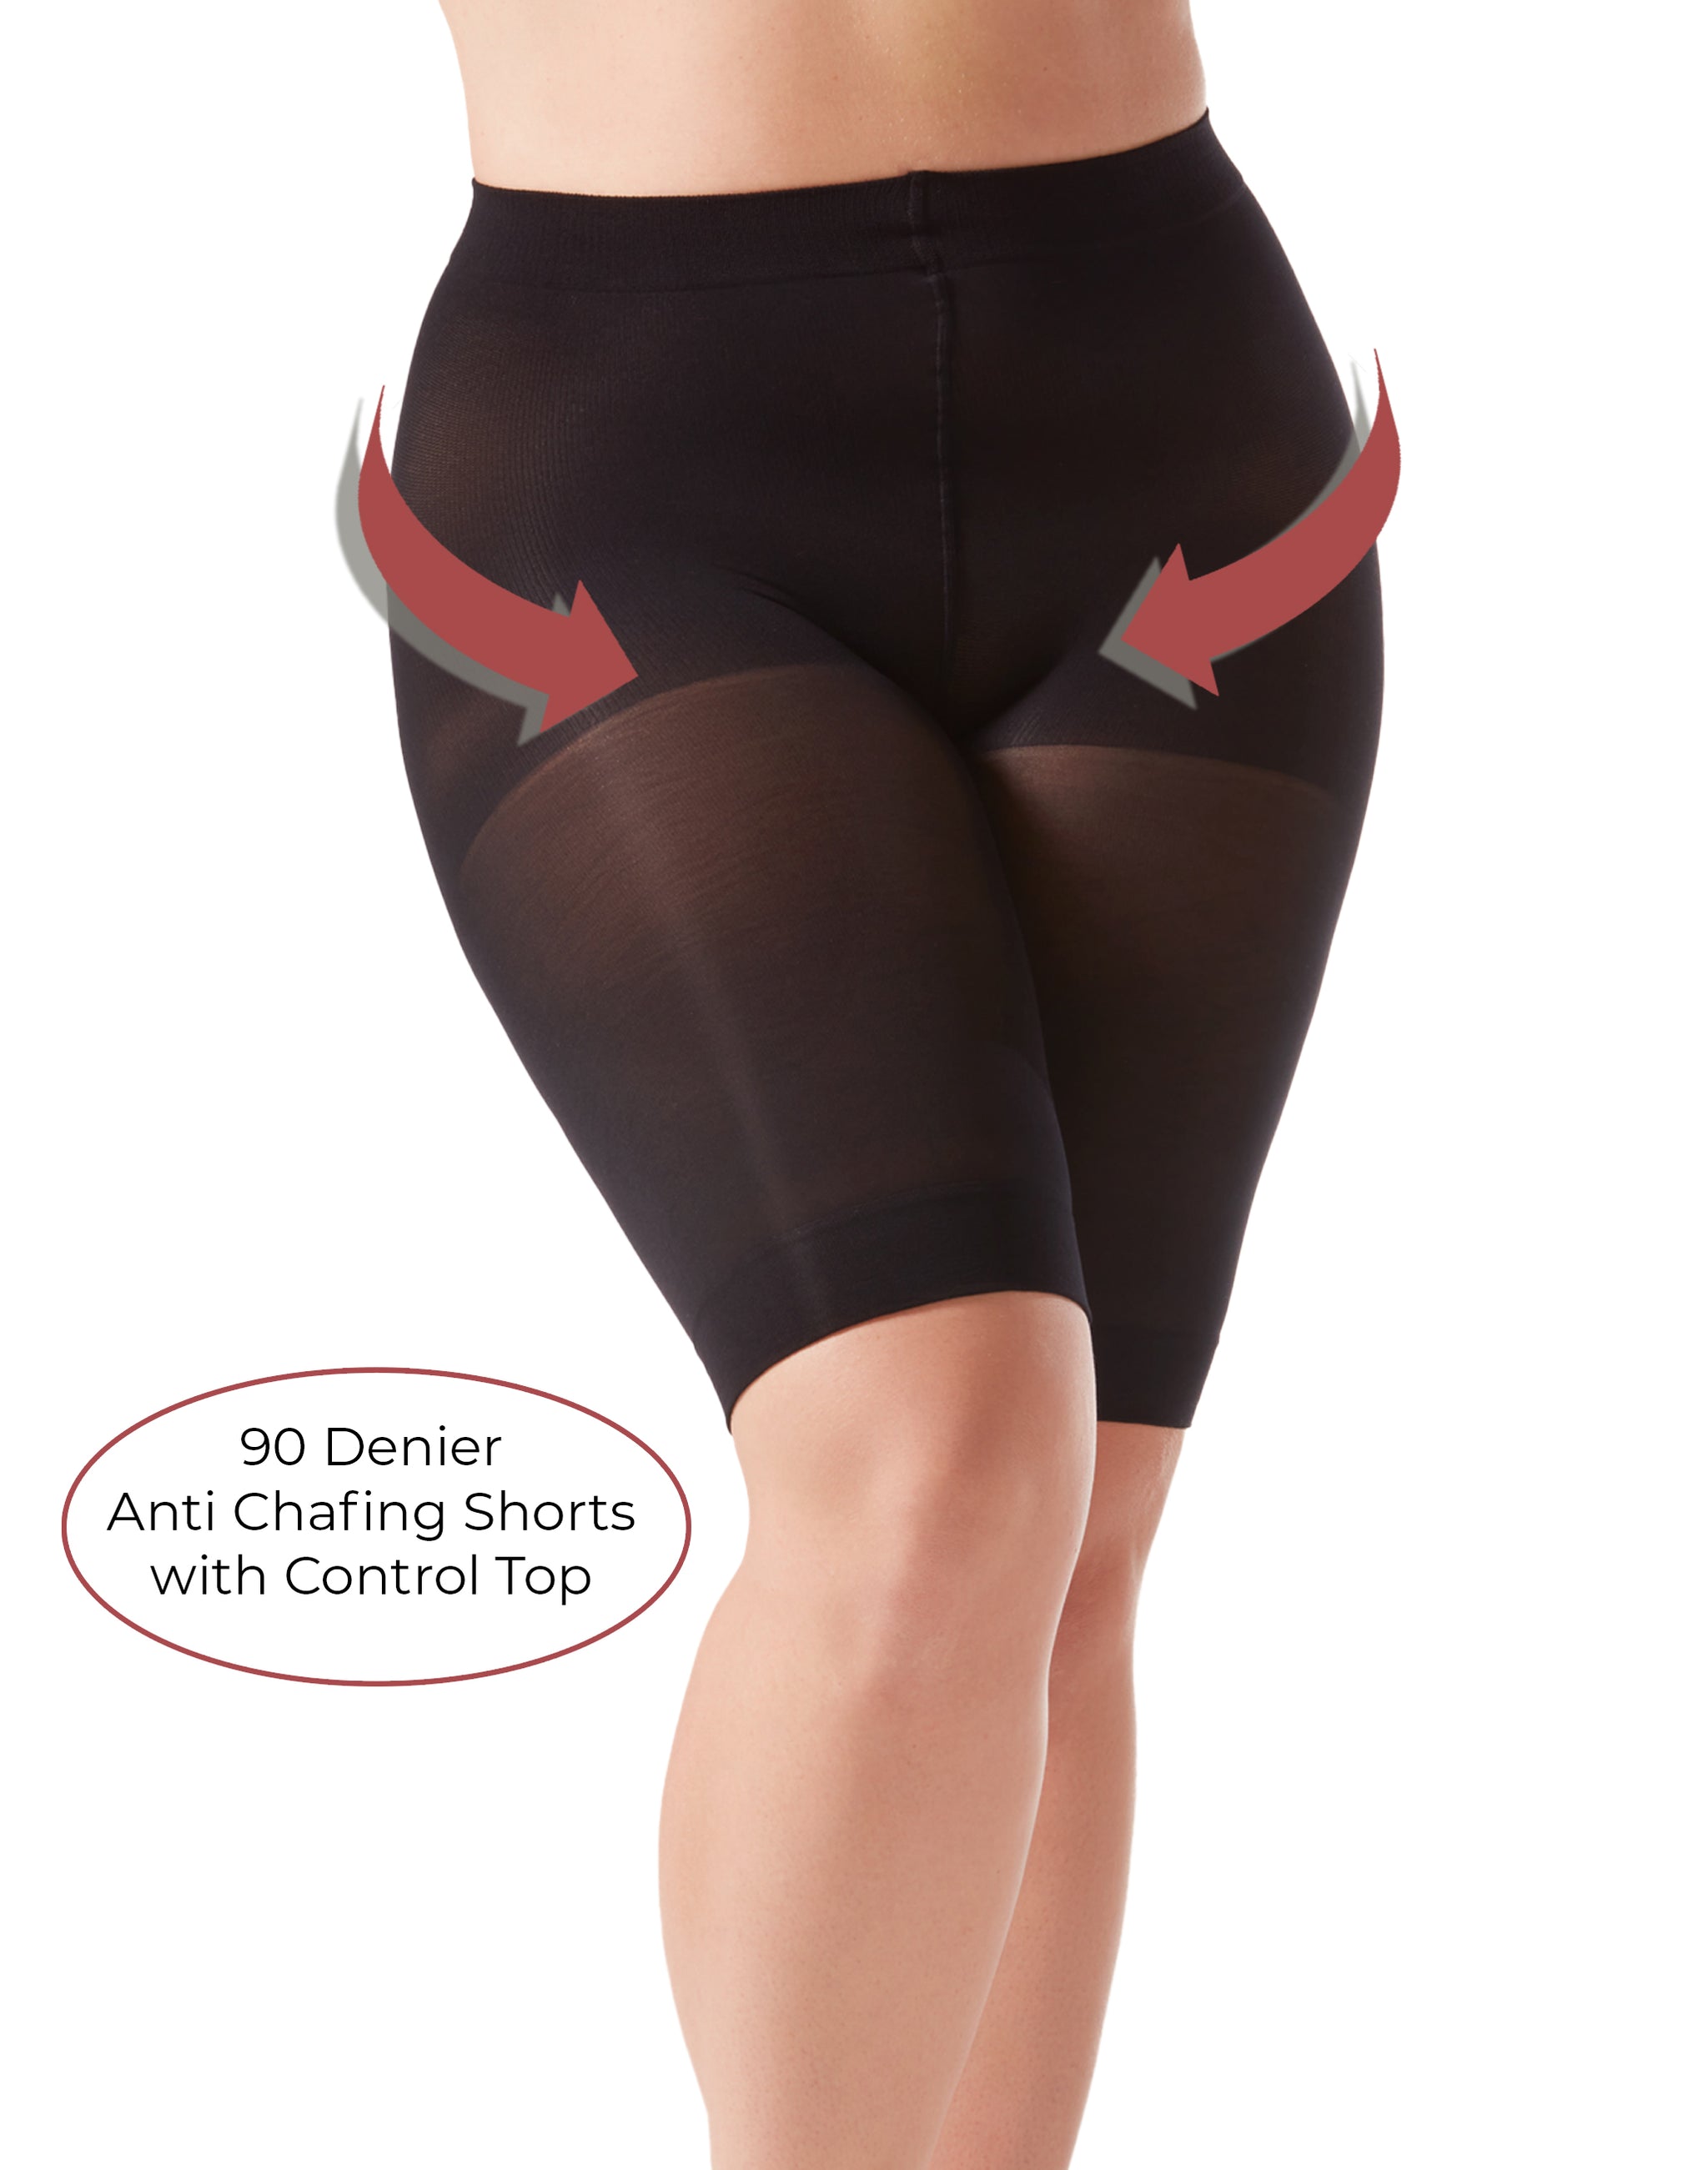 Wholesale Anti Chafing Shorts